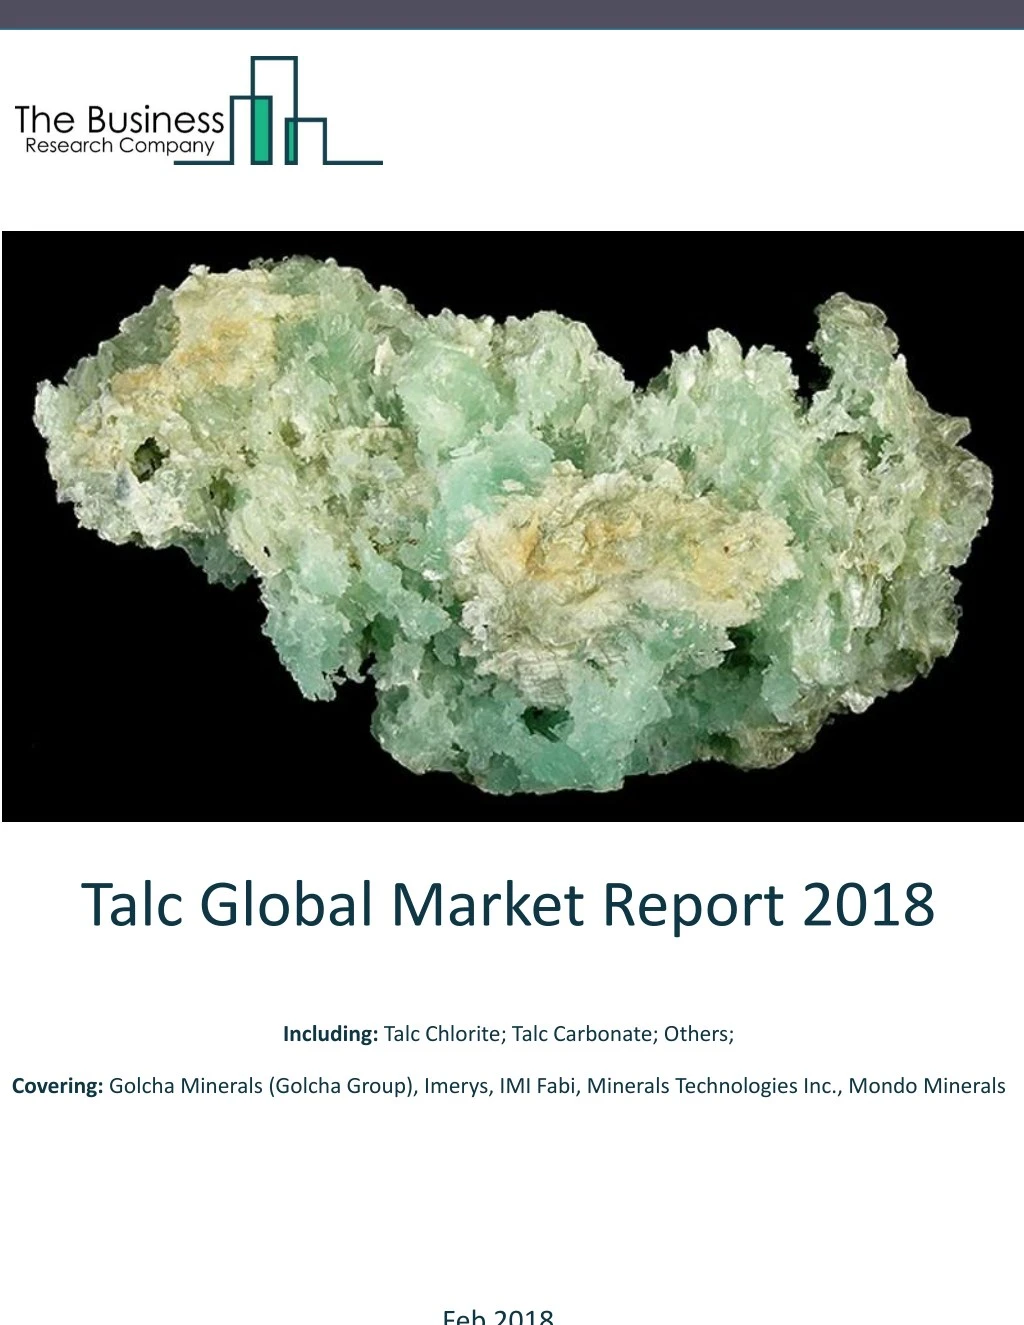 talc global market report 2018